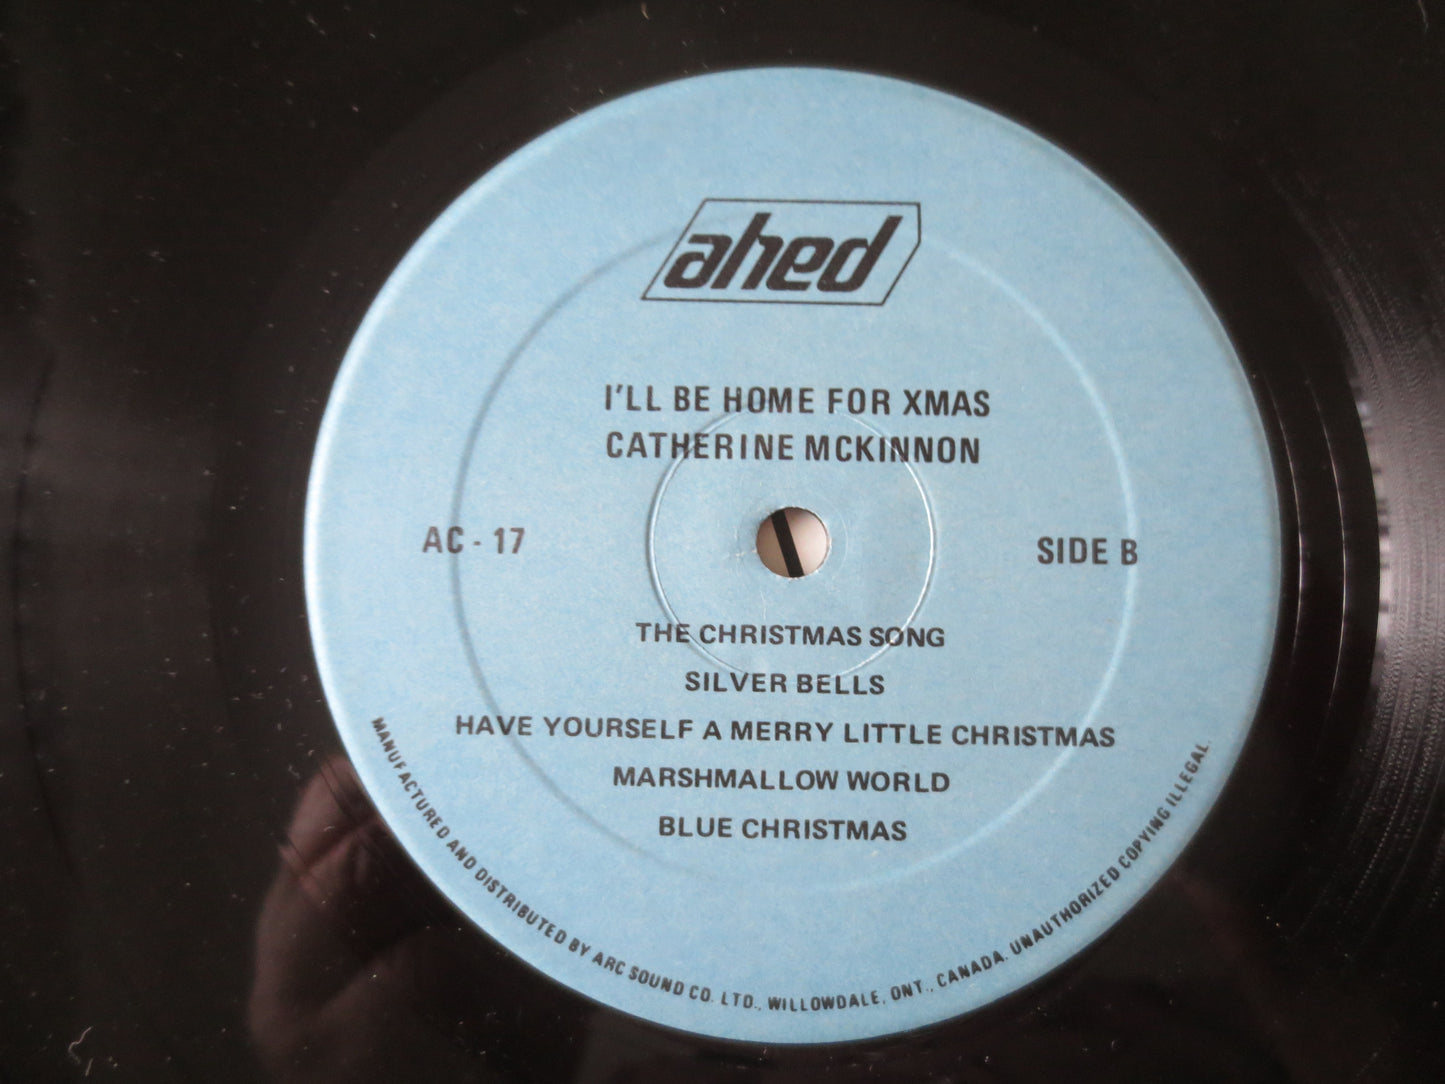 CHRISTMAS, HOME for CHRISTMAS, Christmas Songs, Christmas Carols, Christmas Hymns, Vinyl lps, Christmas lps, 1966 Records